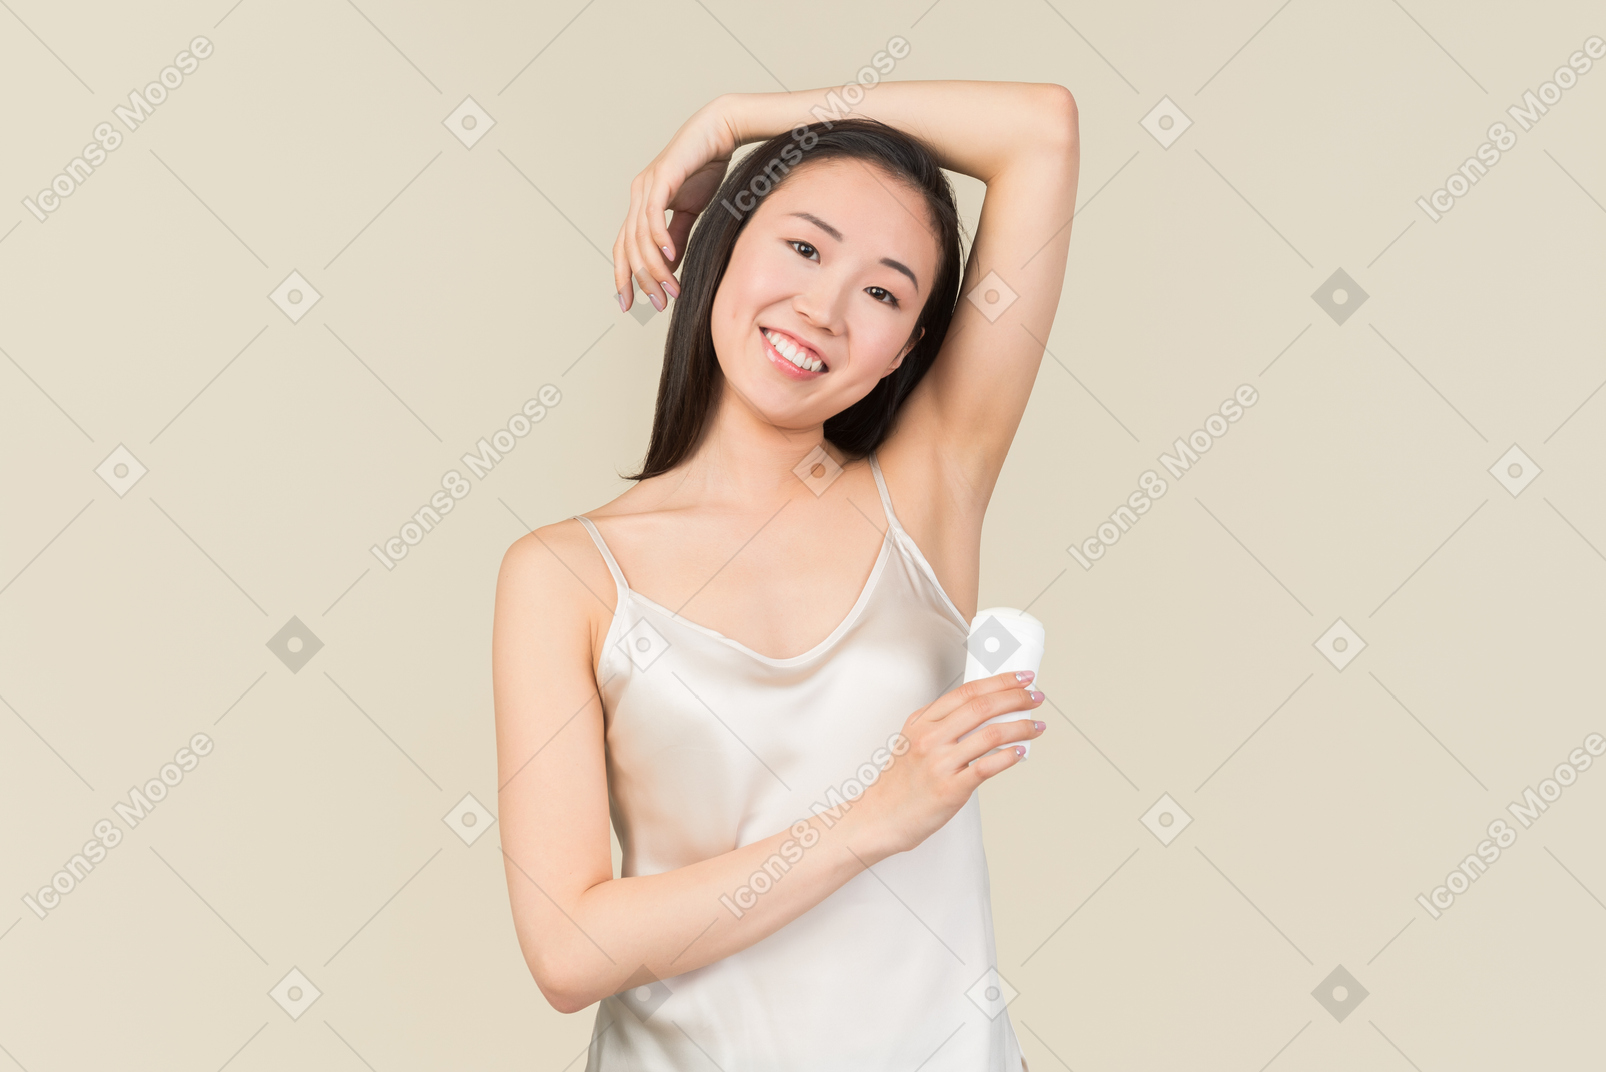 Pretty asian woman applying deodorant on armpit's area